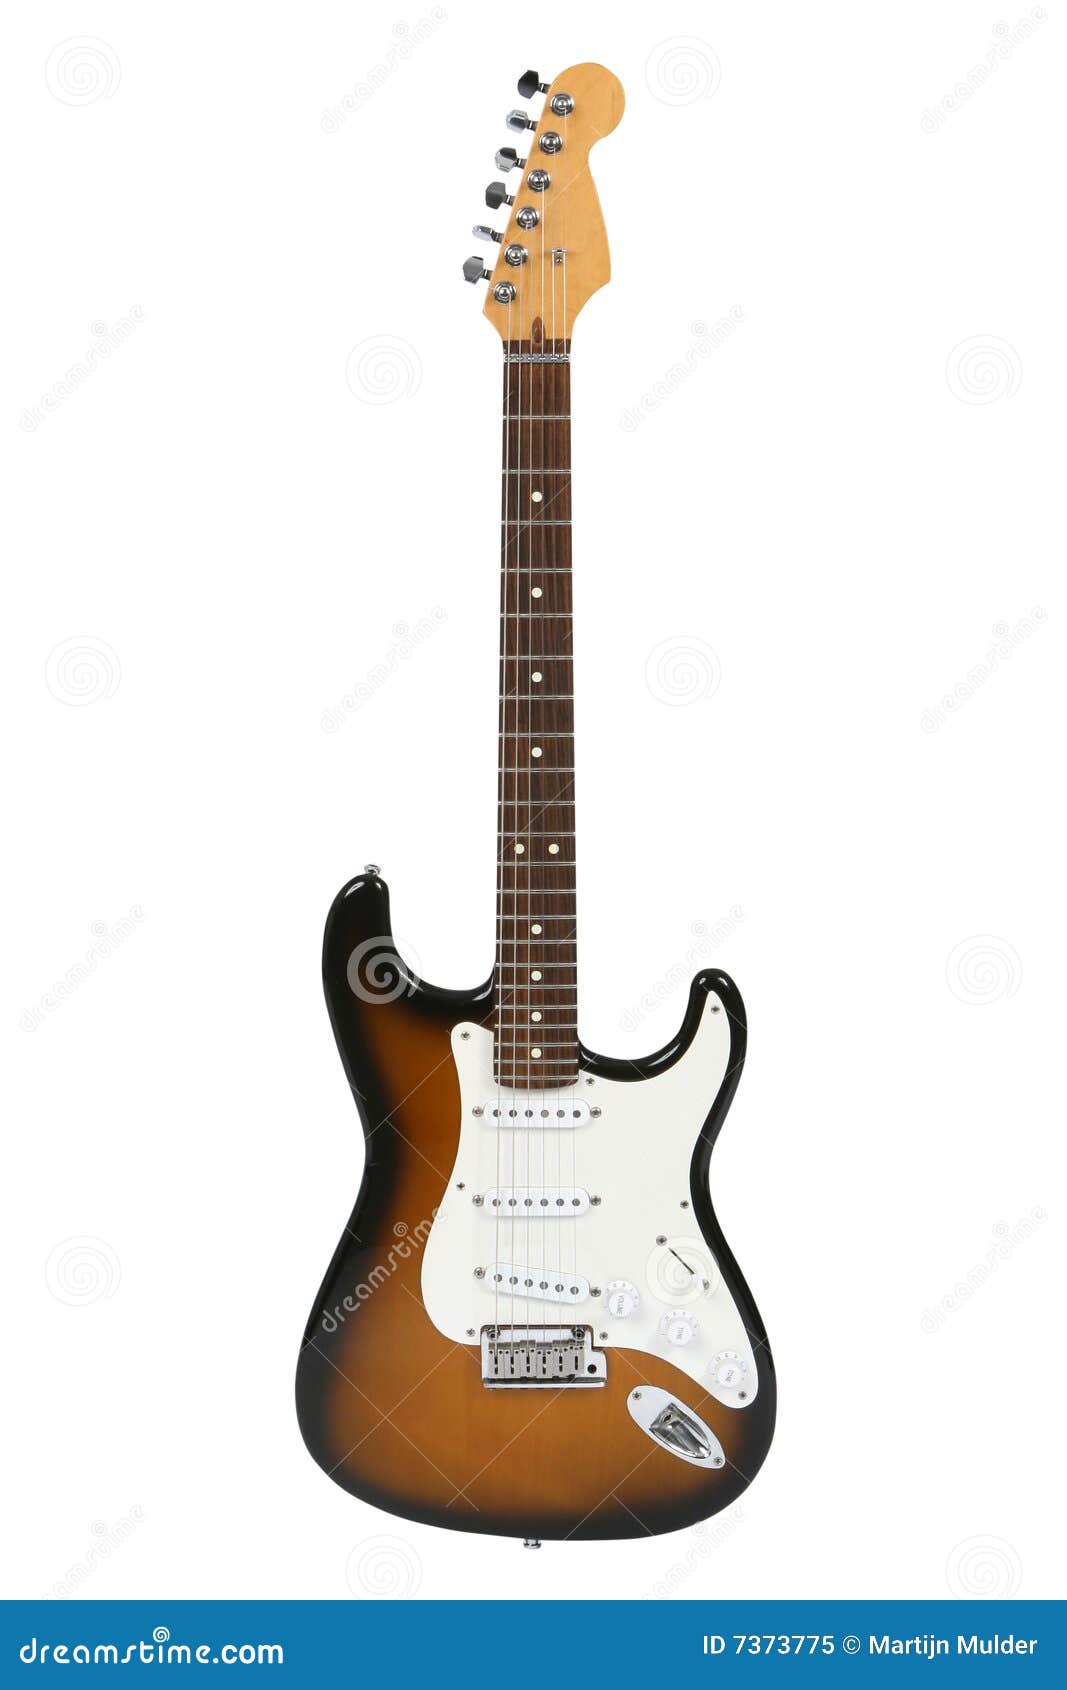 Electric guitar (sunburst Fender Stratocaster), logo removed, isolated 